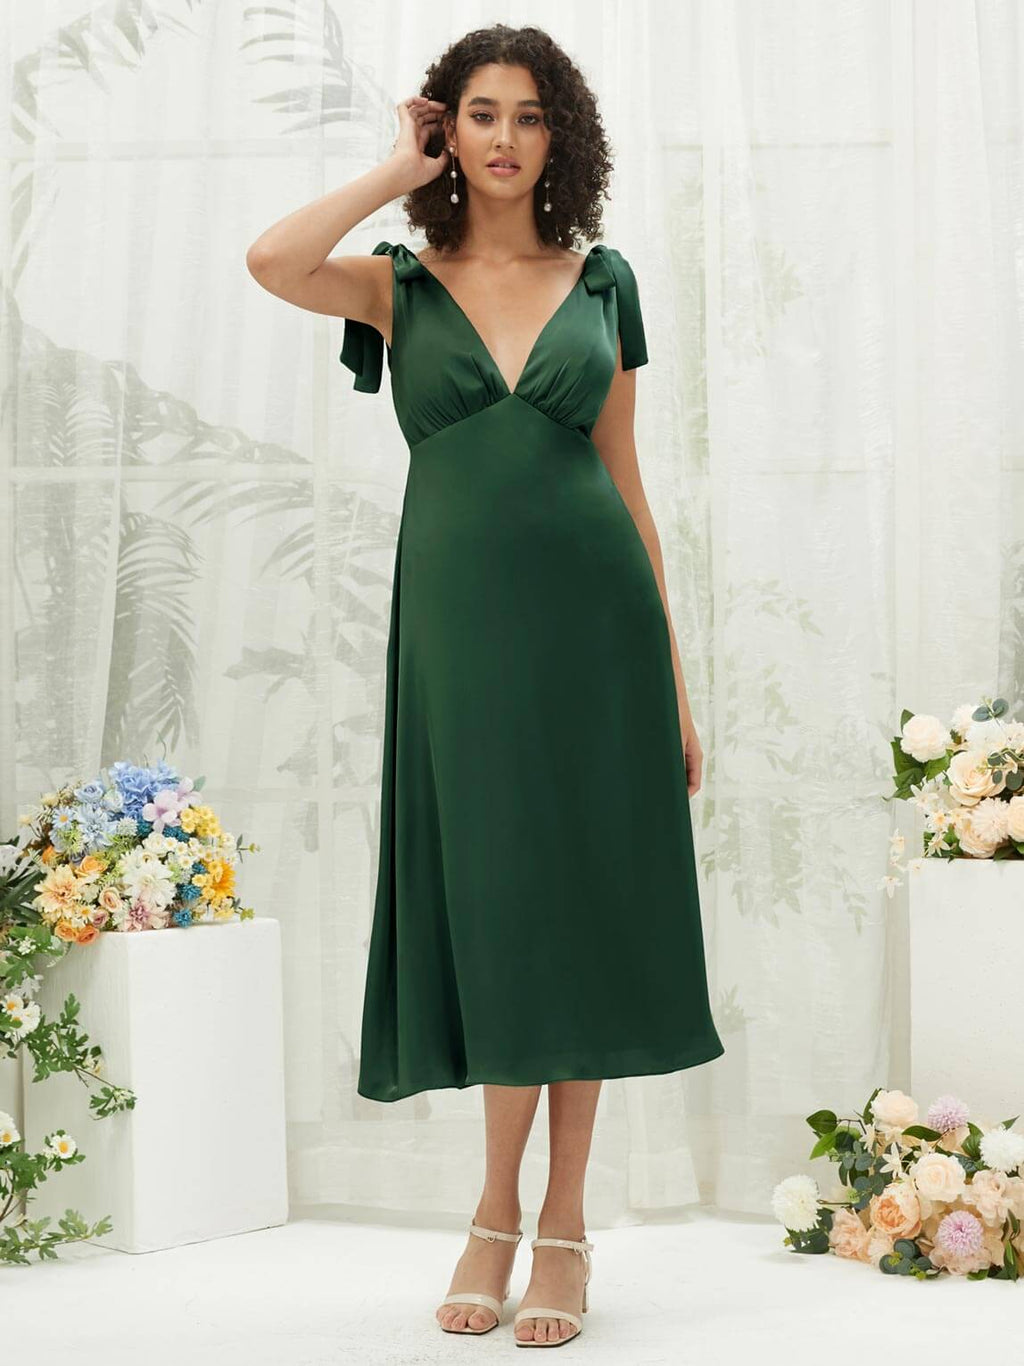 NZ Bridal Emerald Green Detachable Satin Backless bridesmaid dresses BH30512 Gloria a